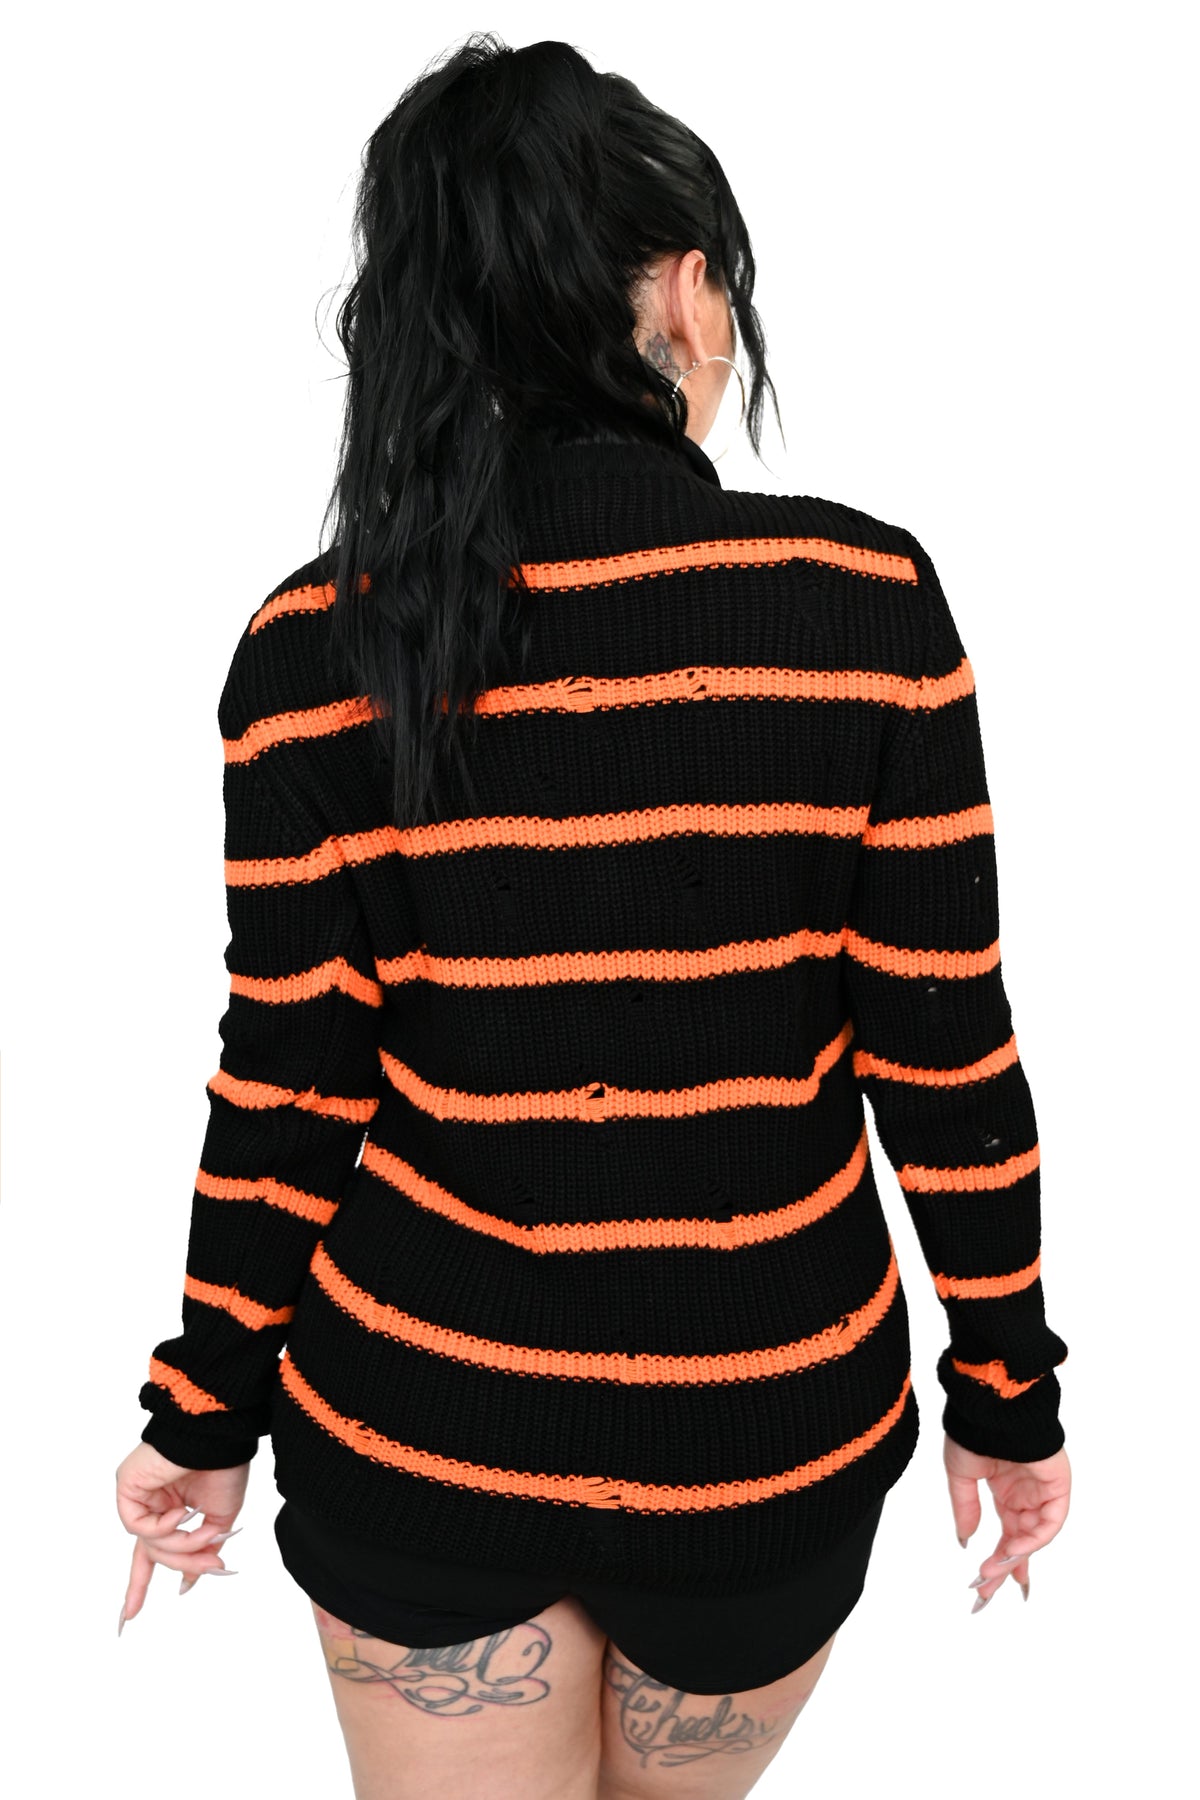 Shredded black sweater with orange stripes. 